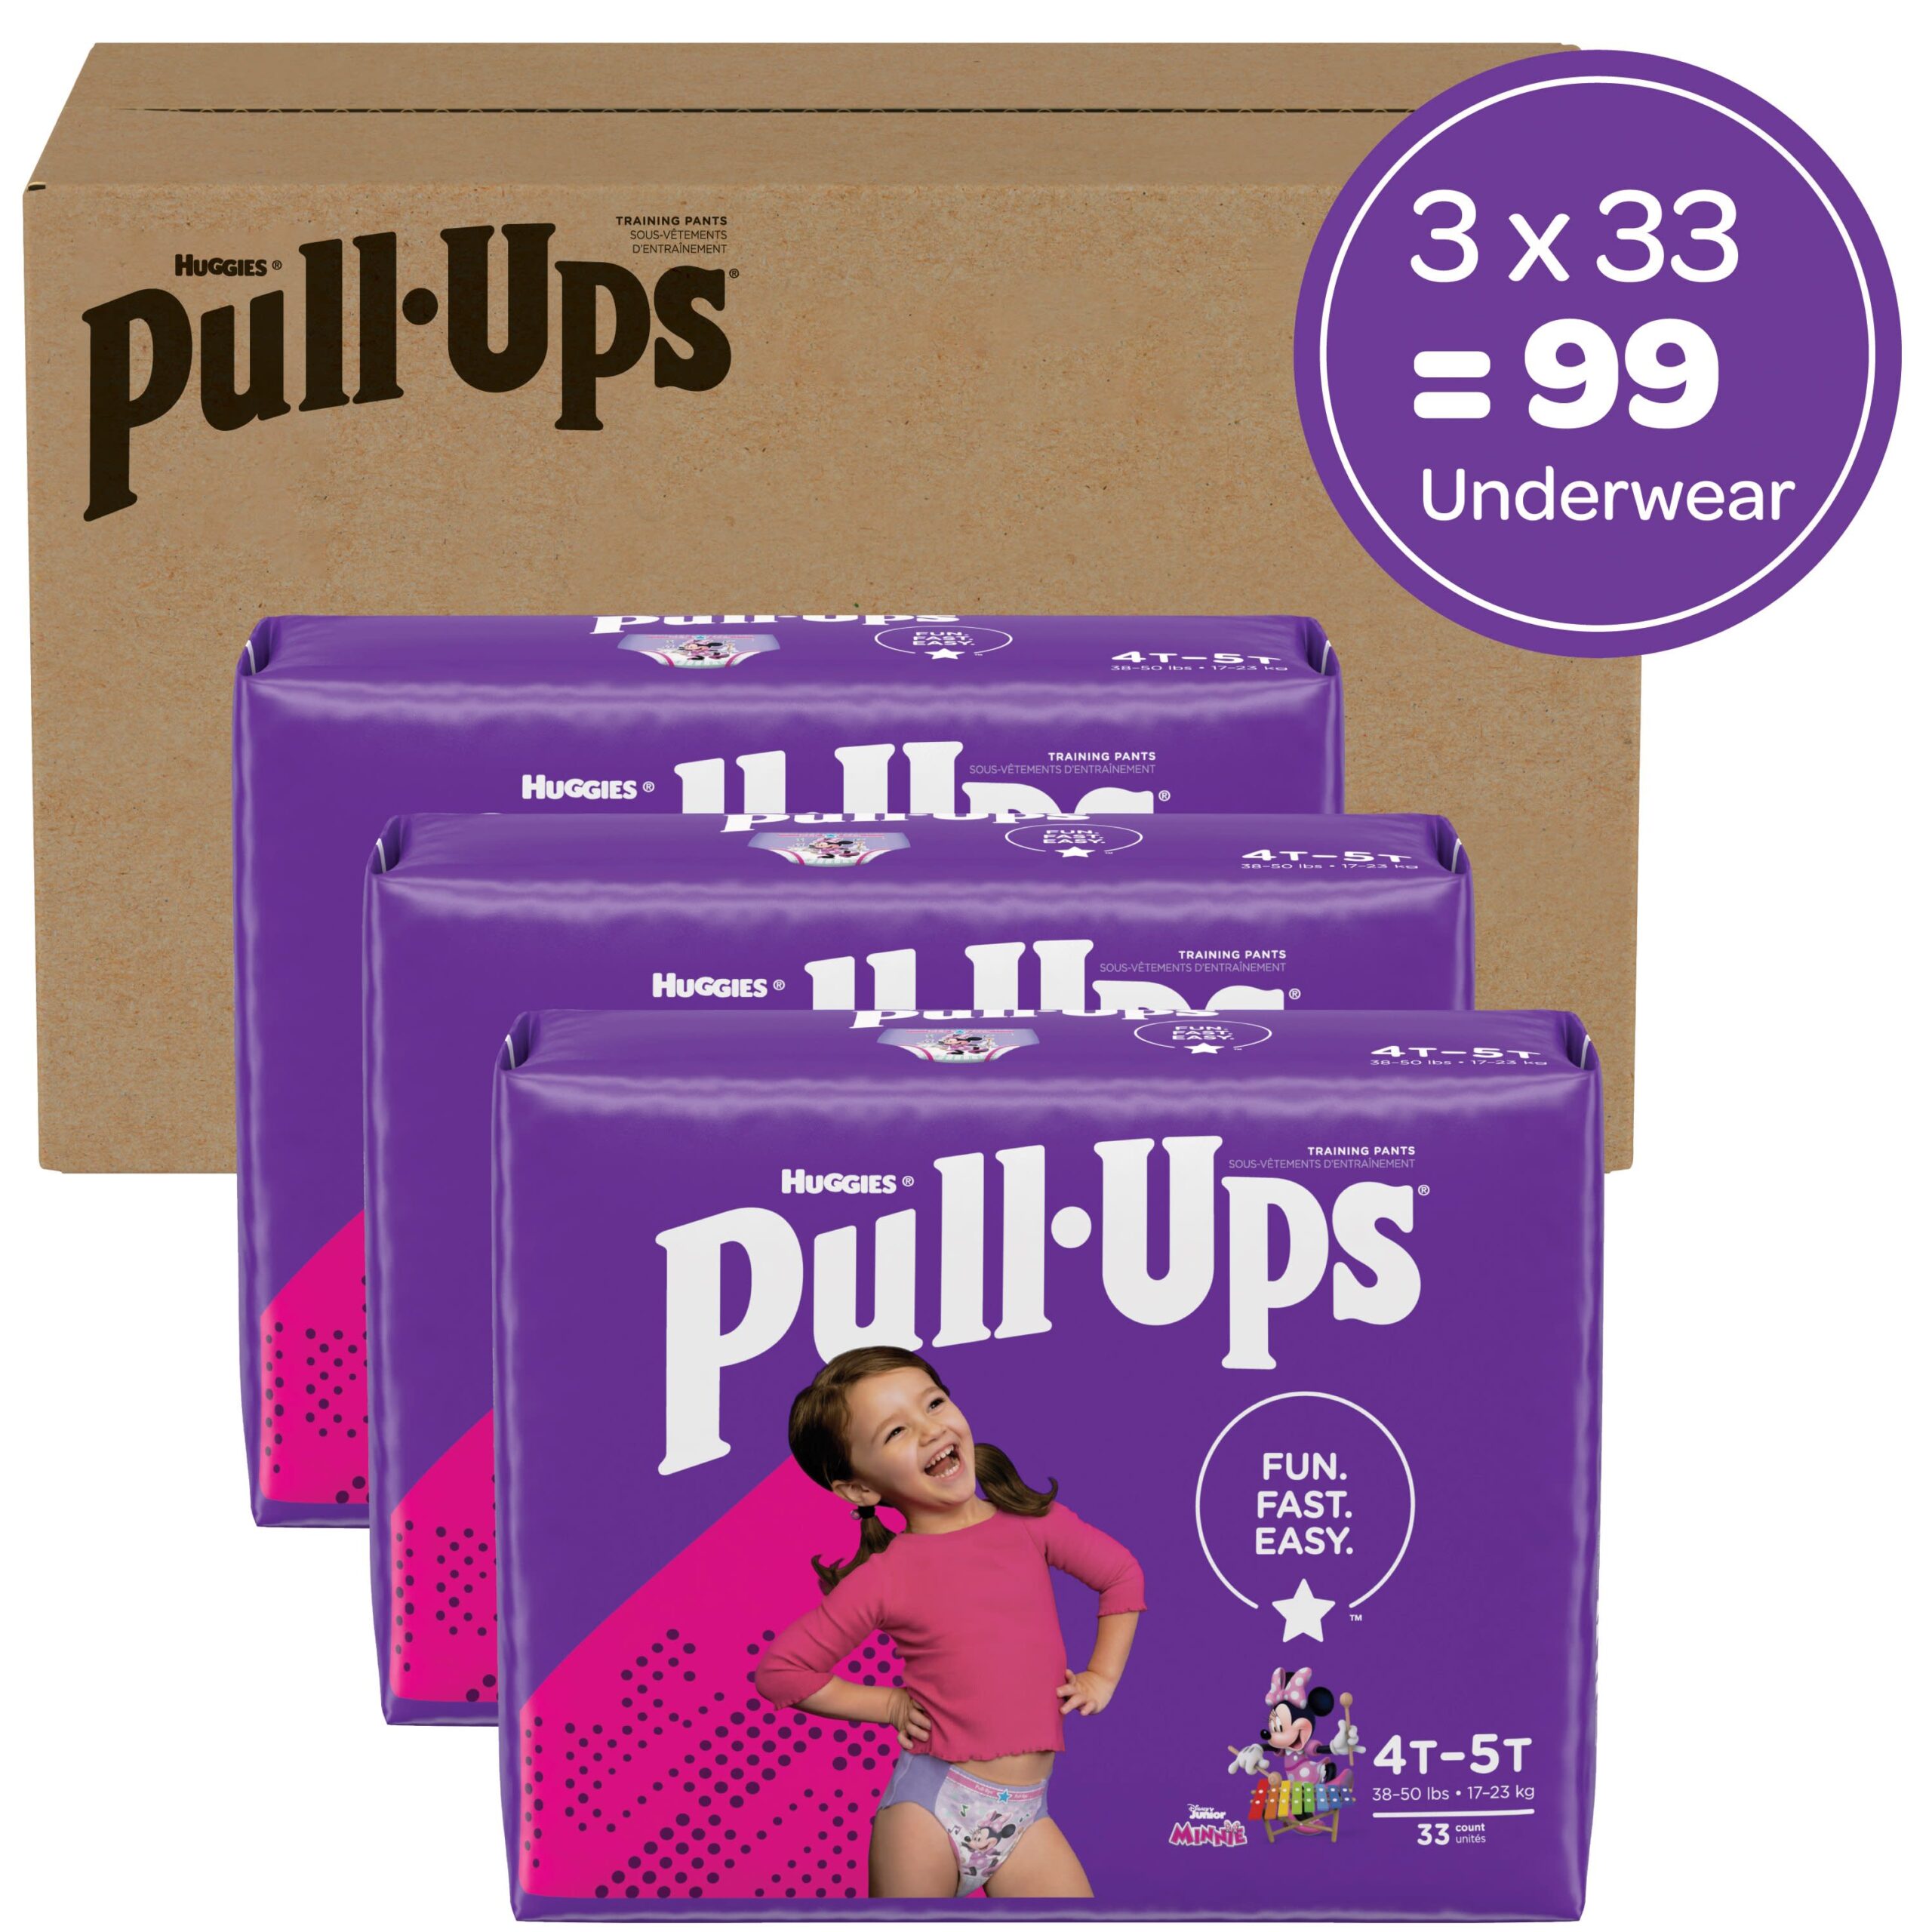 Huggies Pull-Ups Girls' Potty Training Pants, 99 Count, 4T-5T (38